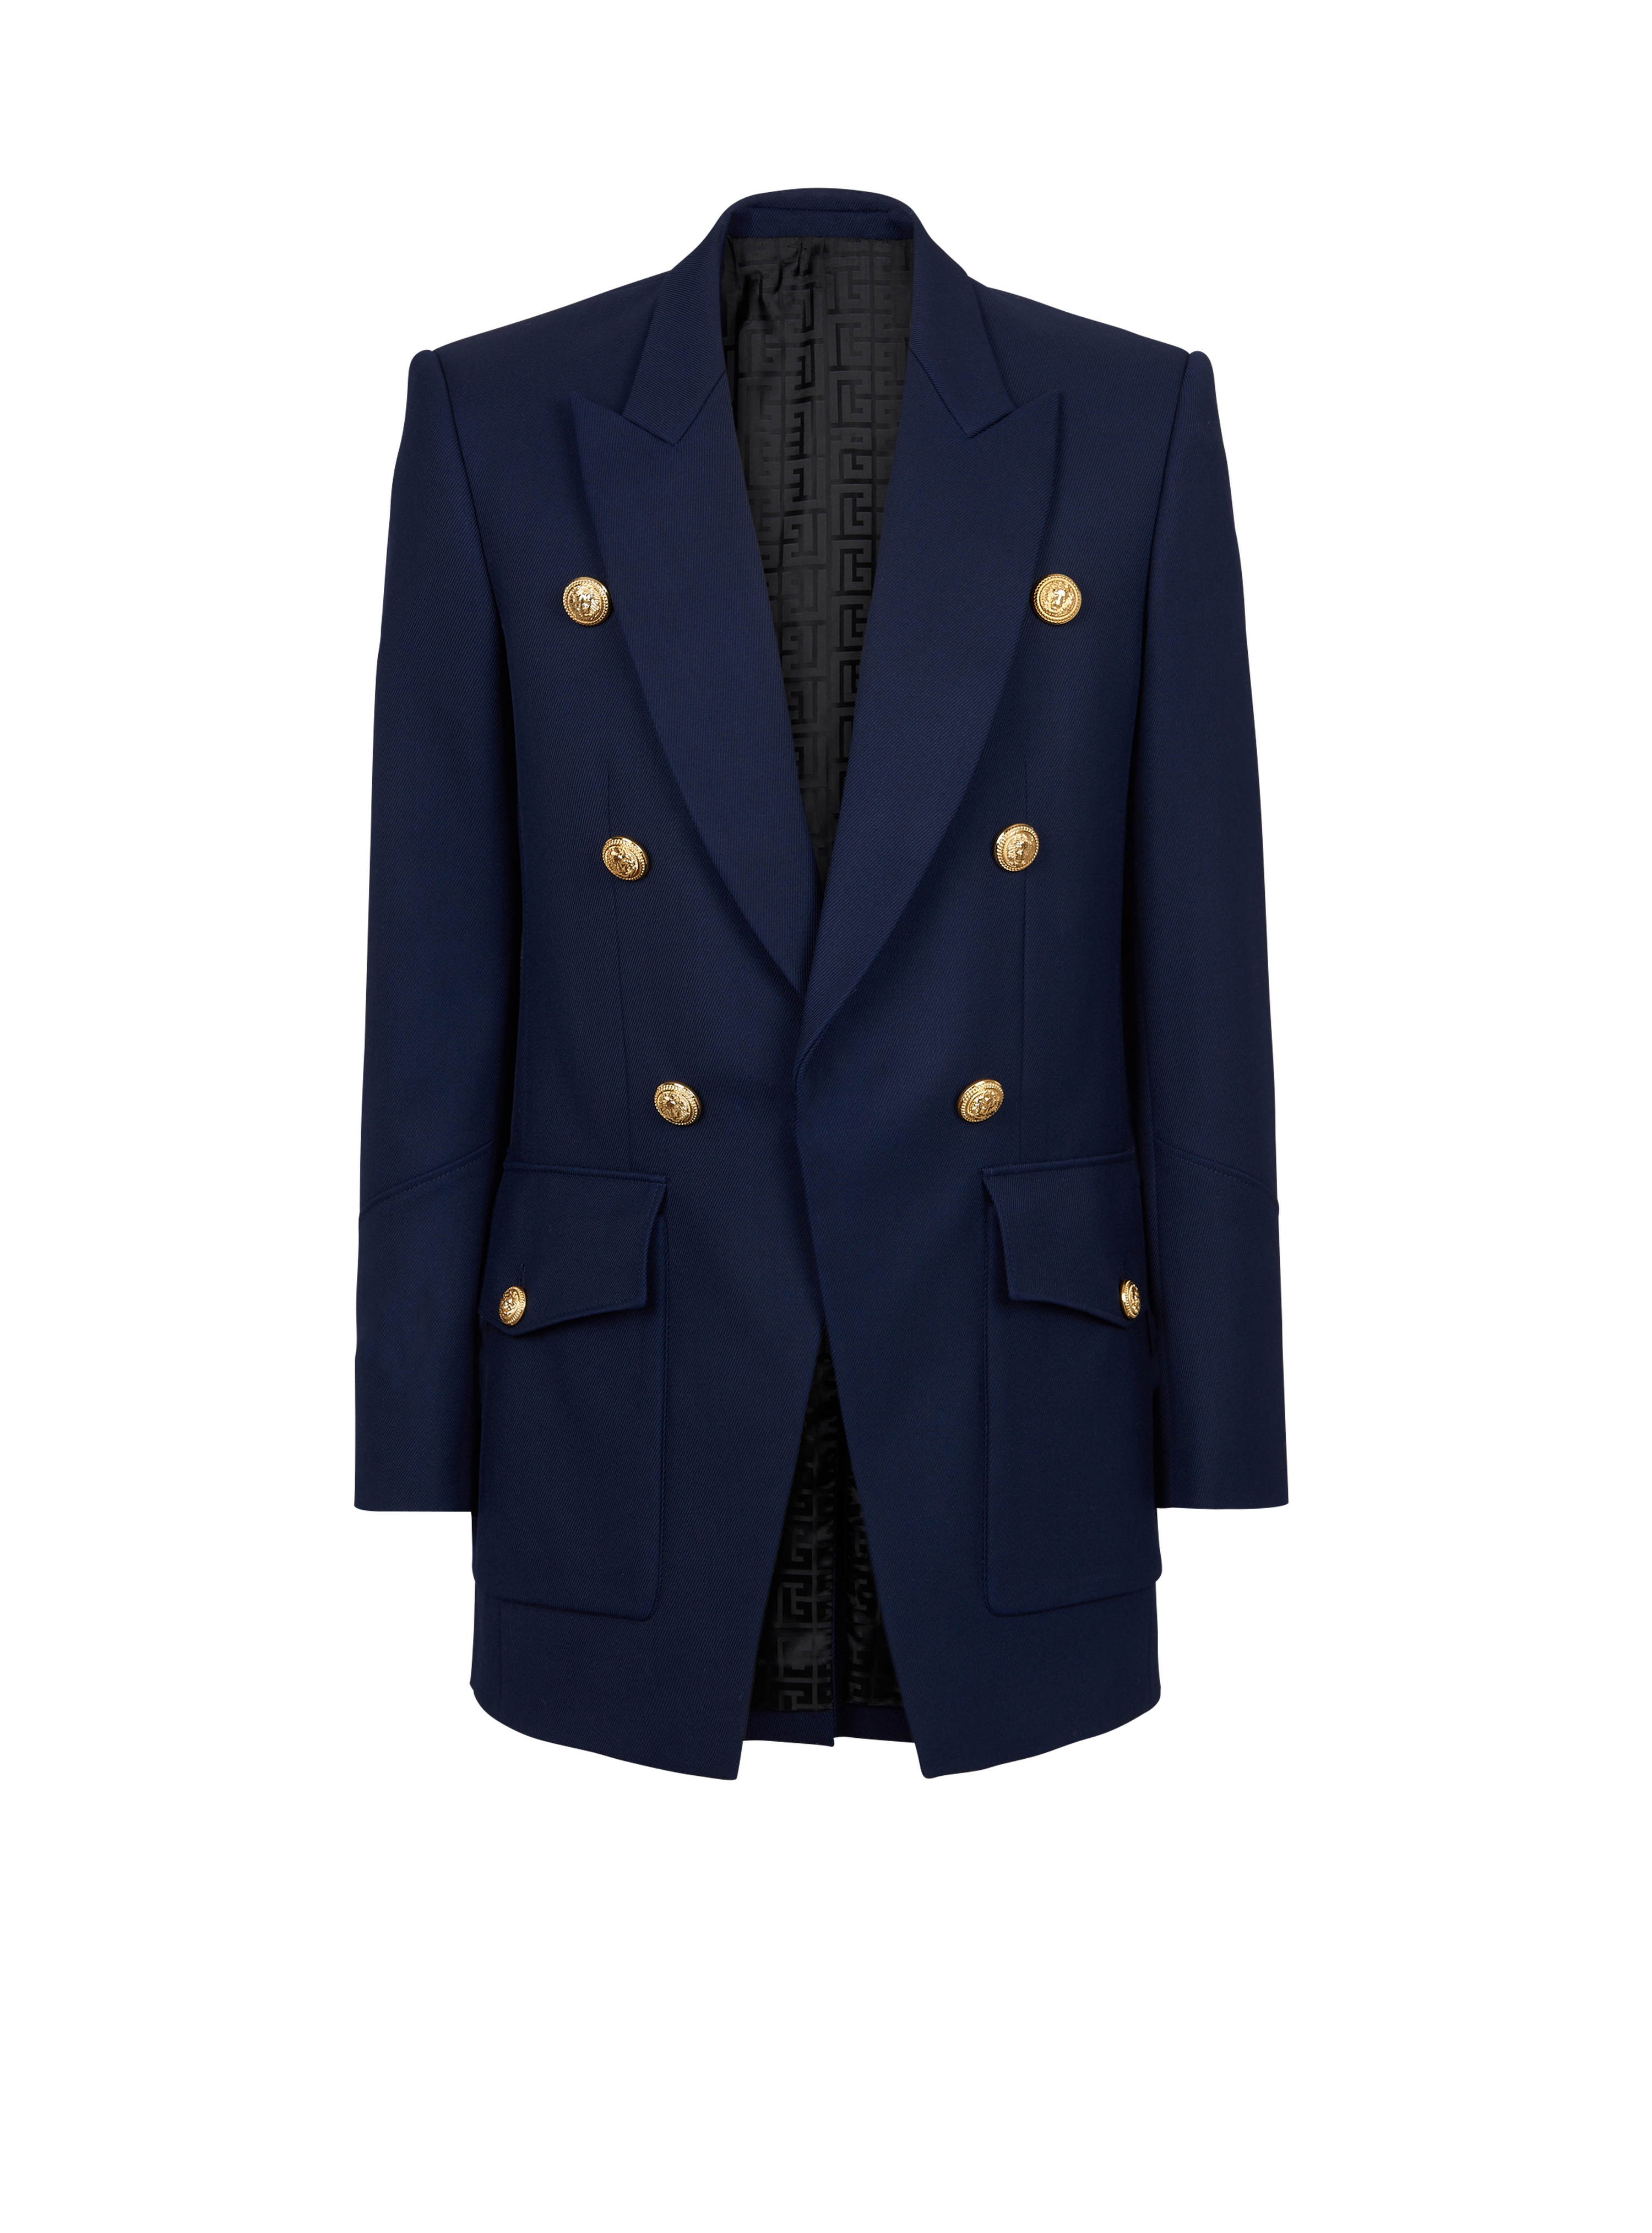 Six-button twill blazer with monogram lining, navy